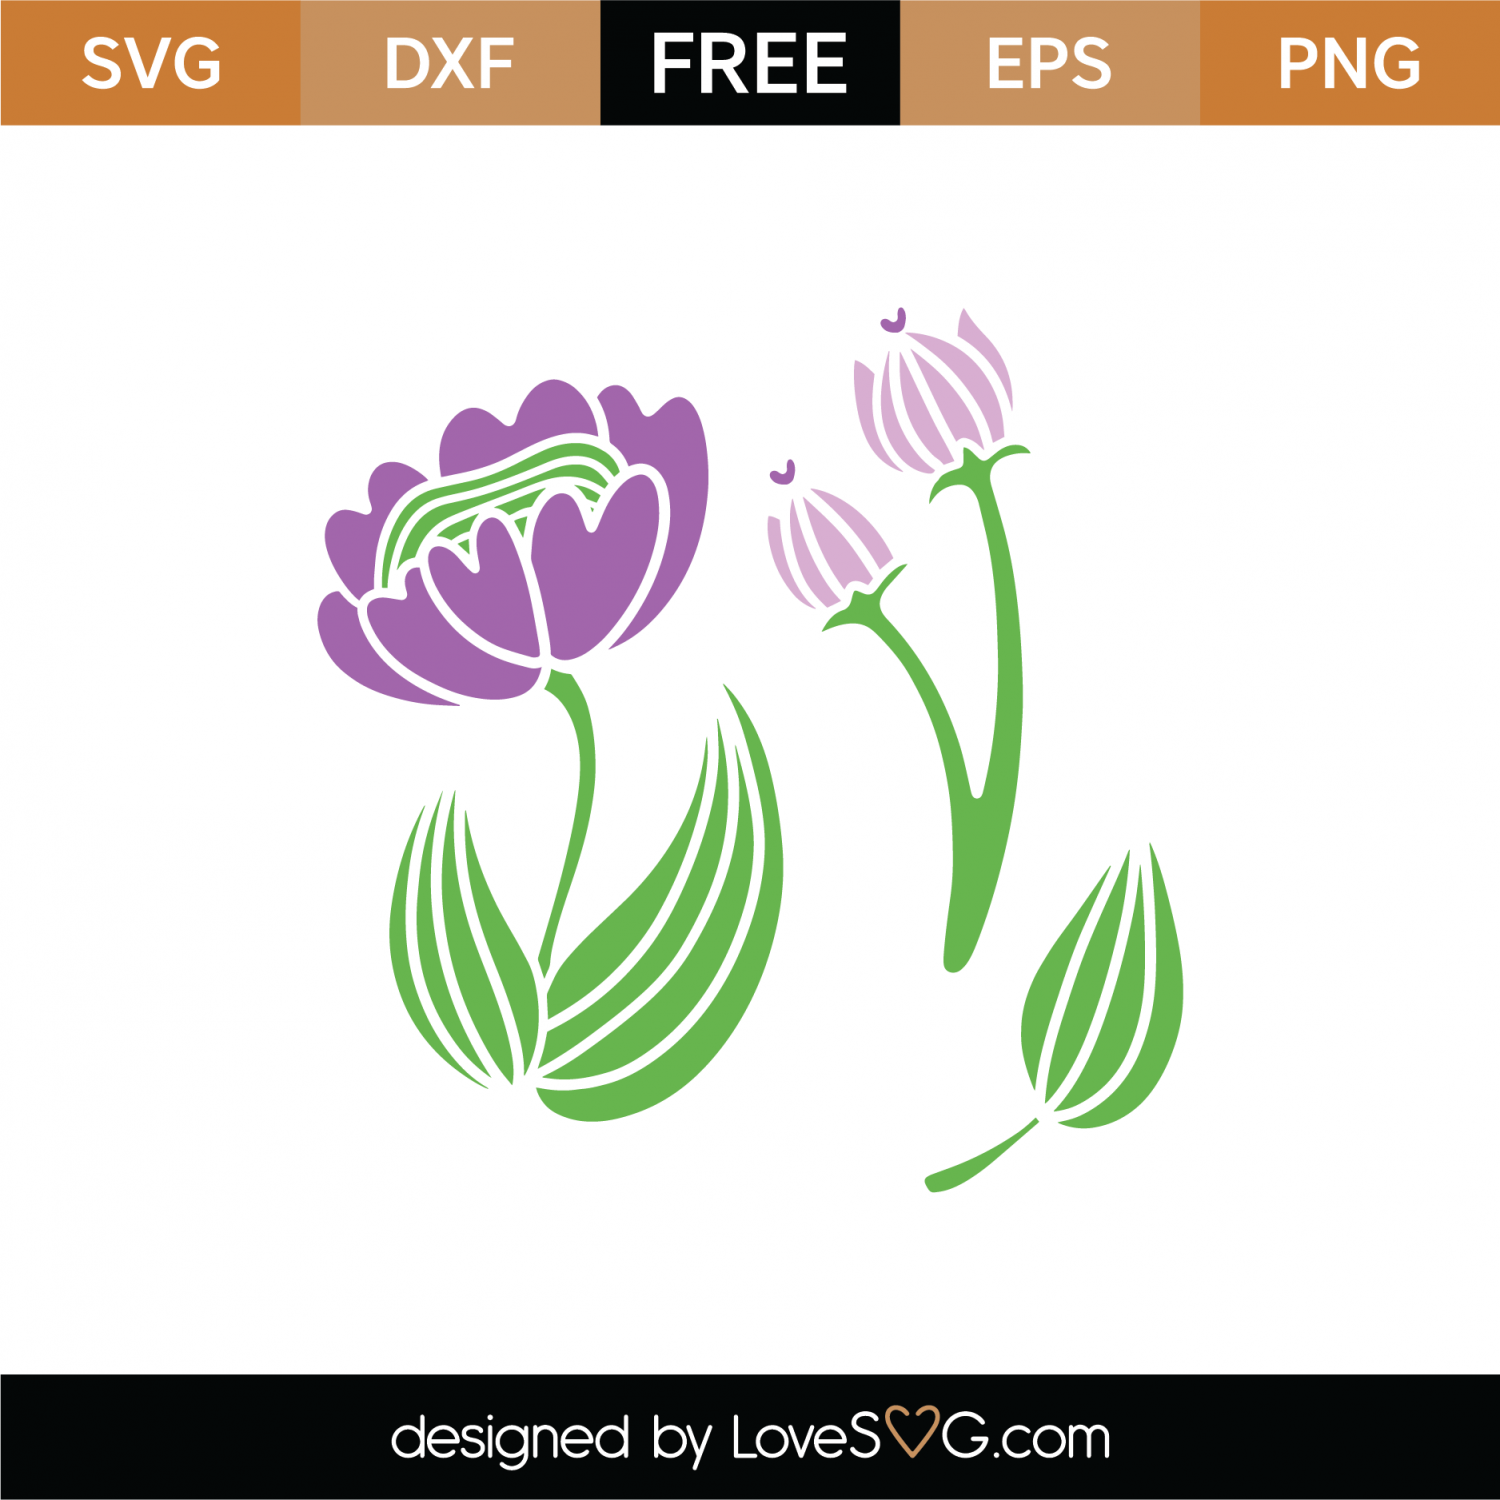 Download Free Flowers SVG Cut File | Lovesvg.com